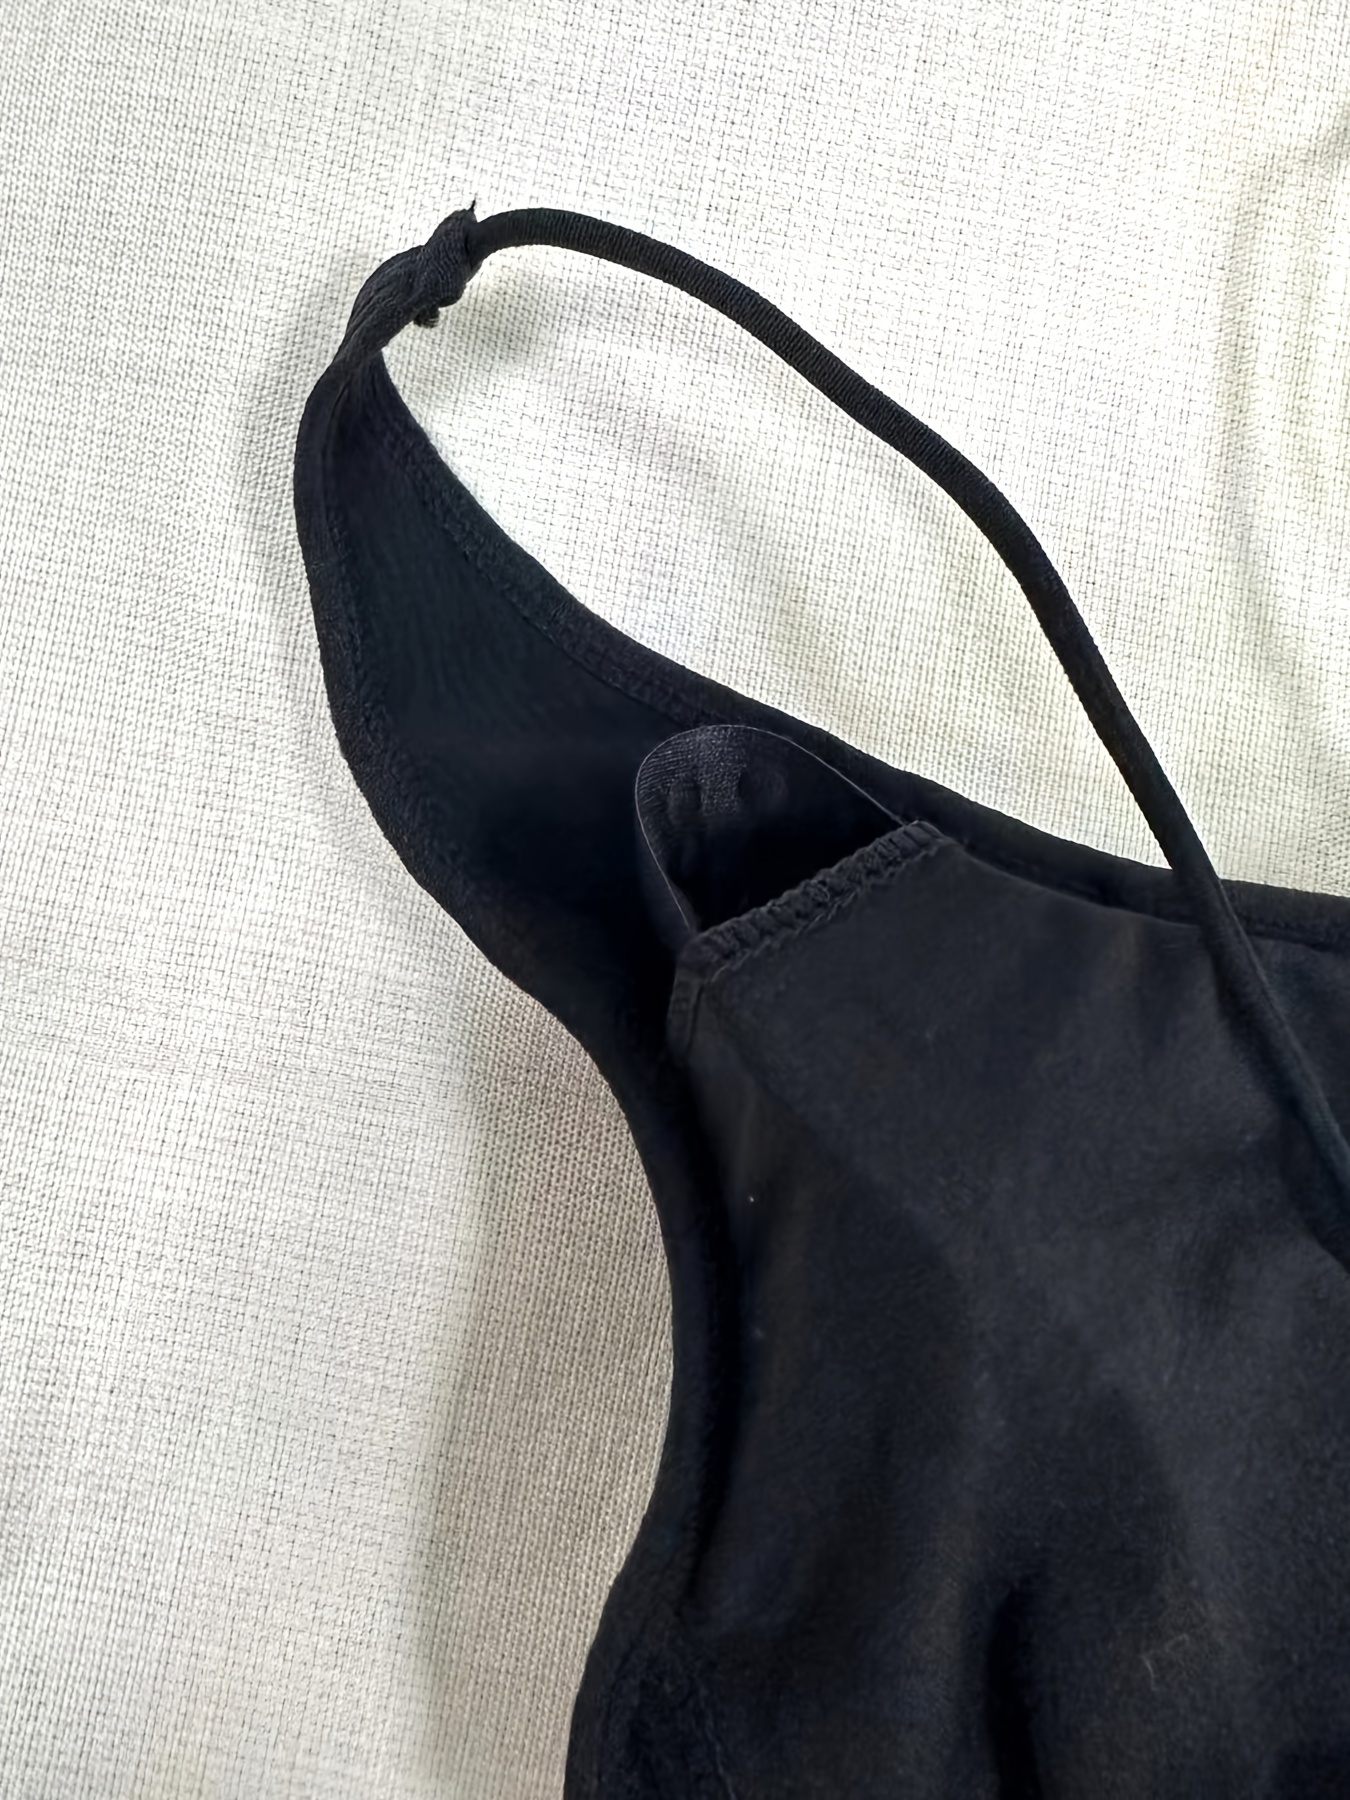 Mubineo Women Triangle Bra Solid Knit Rib Full Coverage Wireless Adjustable  Thin Padded Brassiere